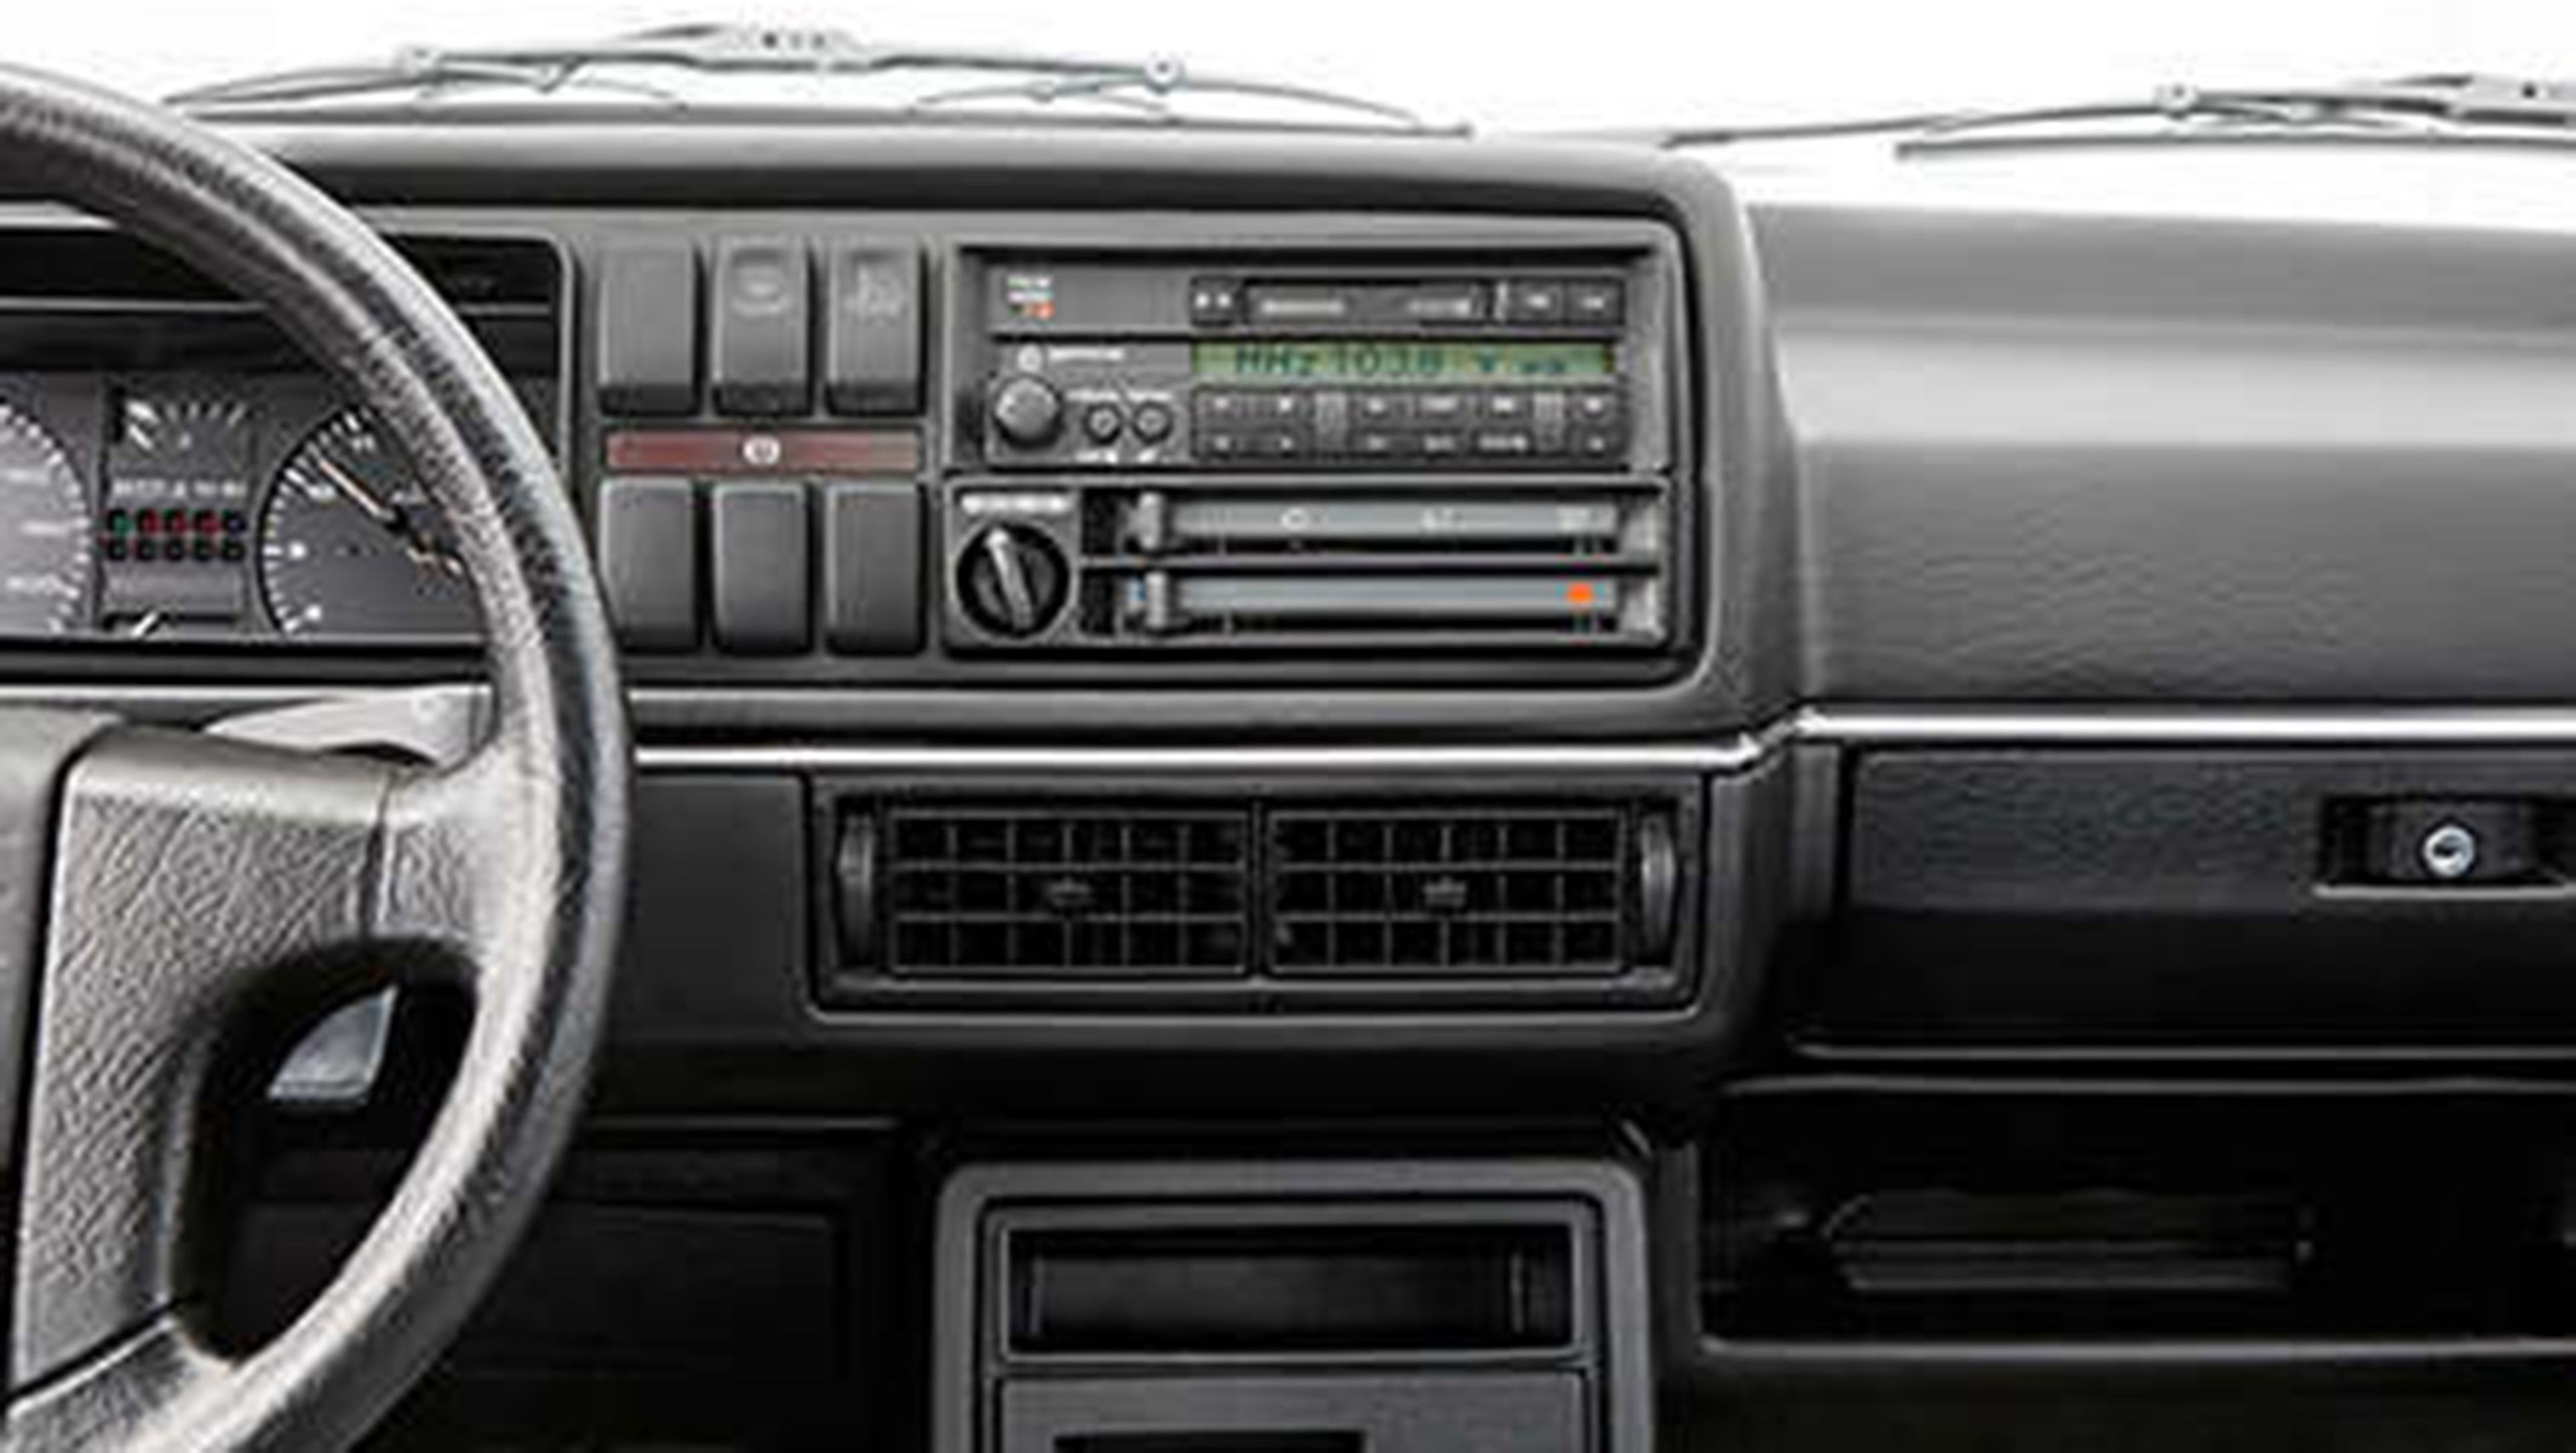 Golf Mk2 radio